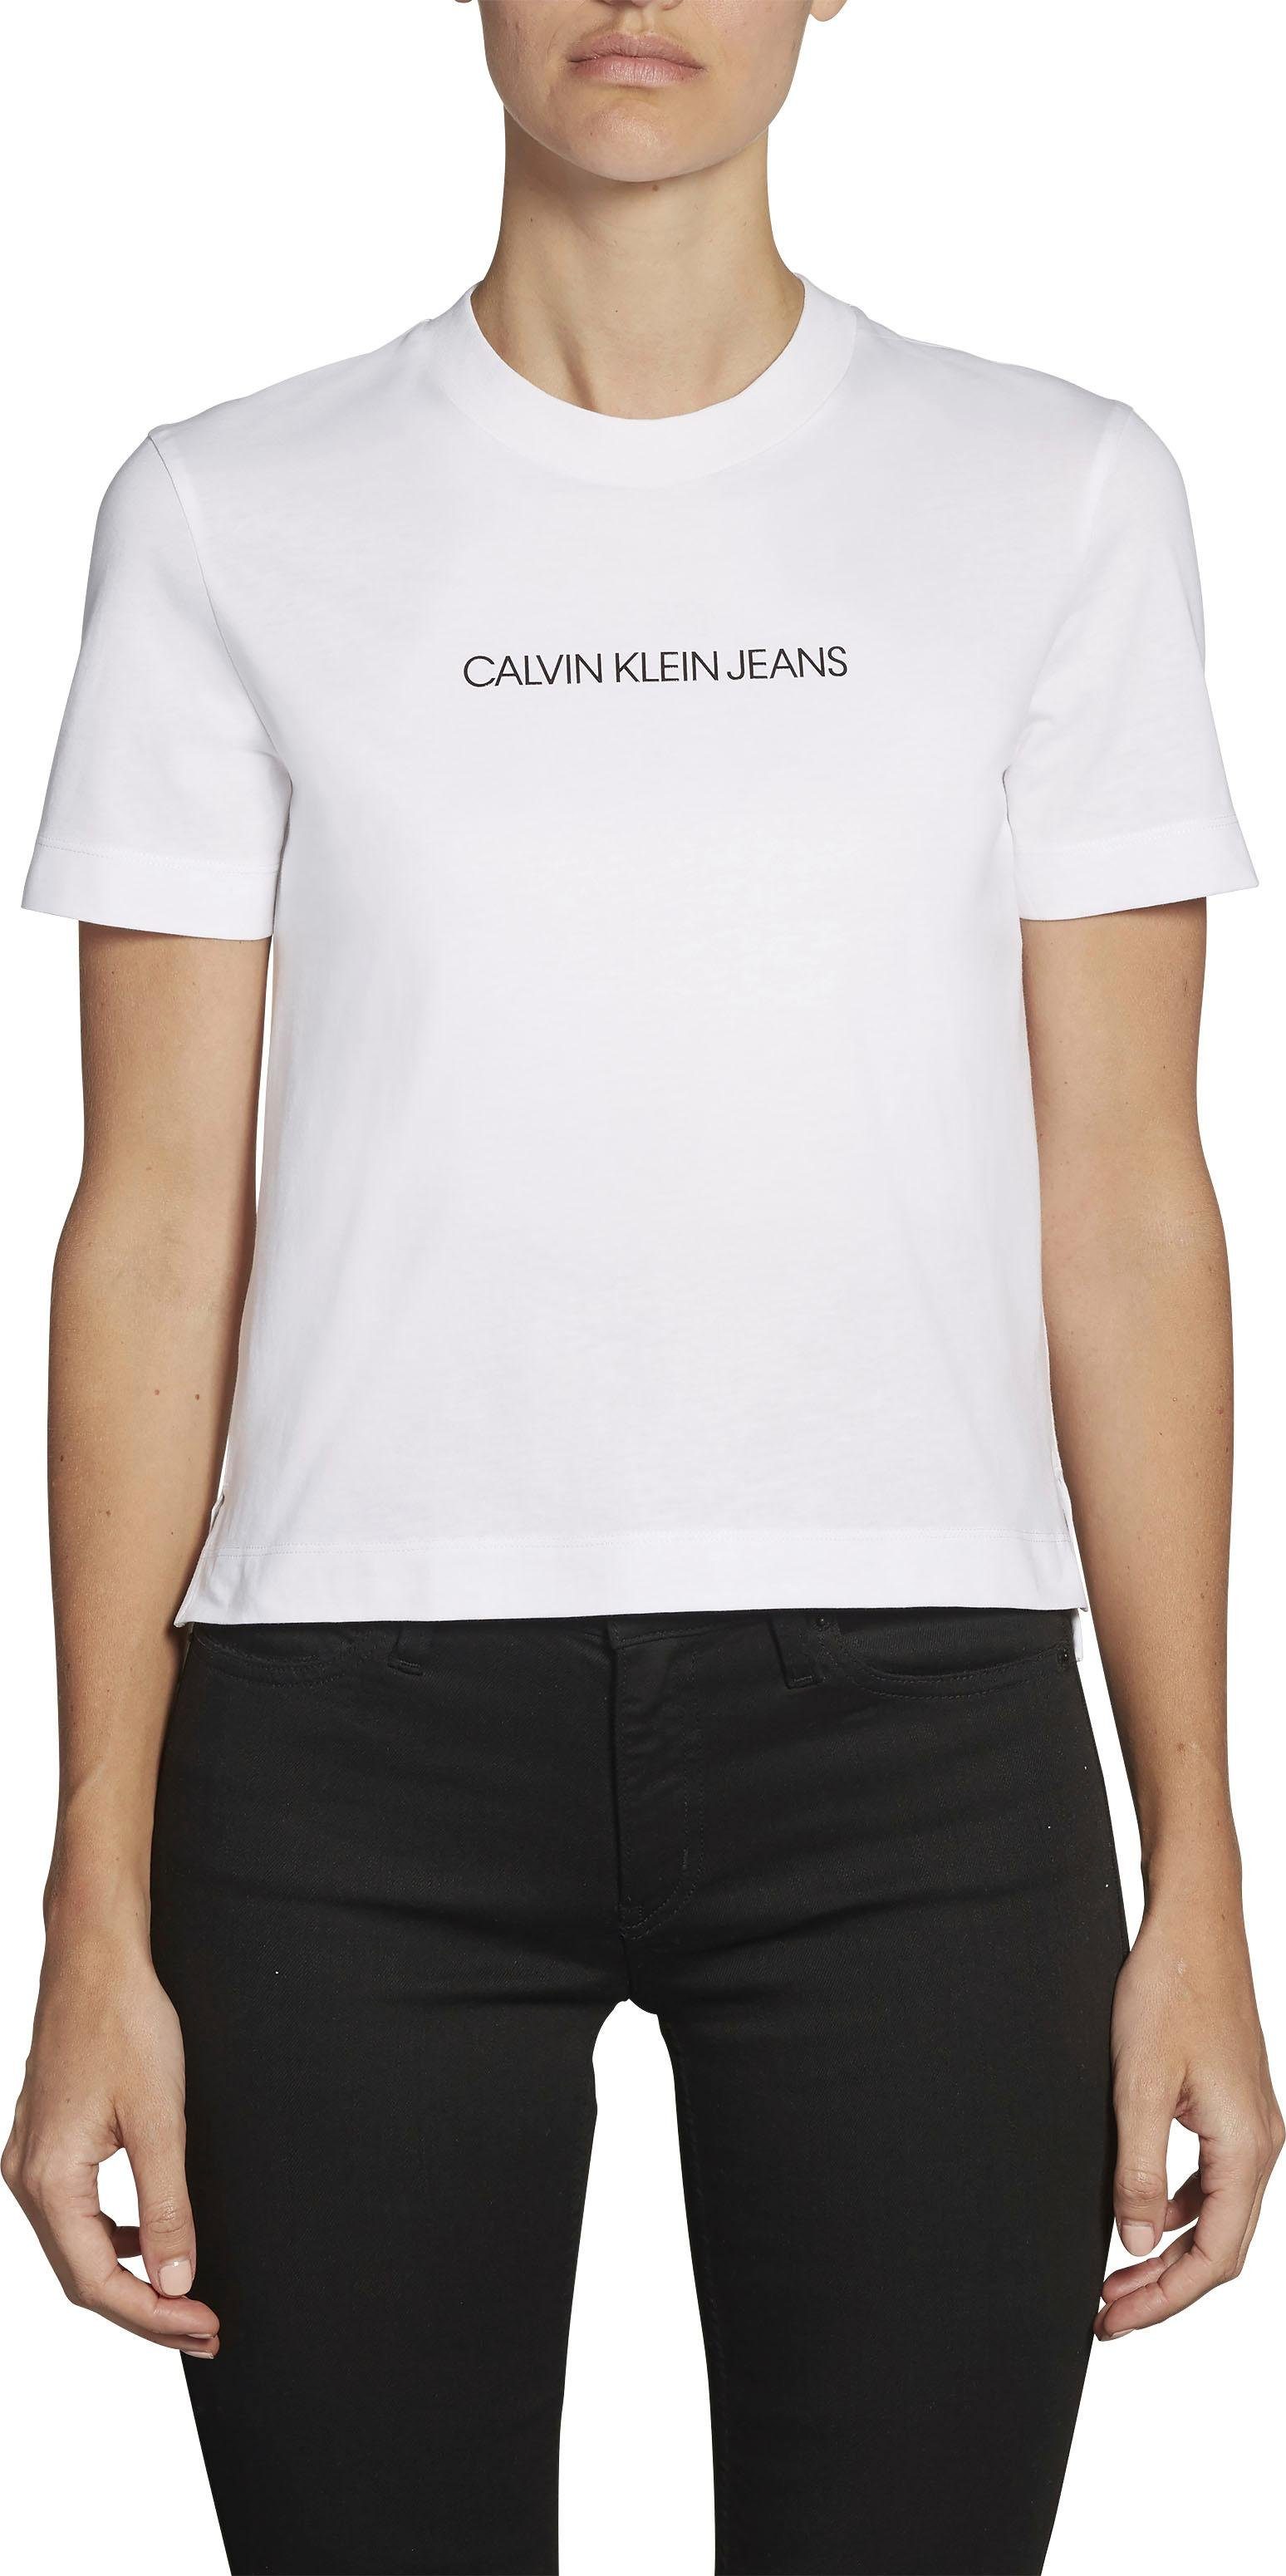 Футболки кельвин кляйн купить. Calvin Klein футболка женская белая. Футболка Кельвин Кляйн белая. Футболка Кельвин Кляйн джинс. Calvin Klein Jeans футболка женская белая.